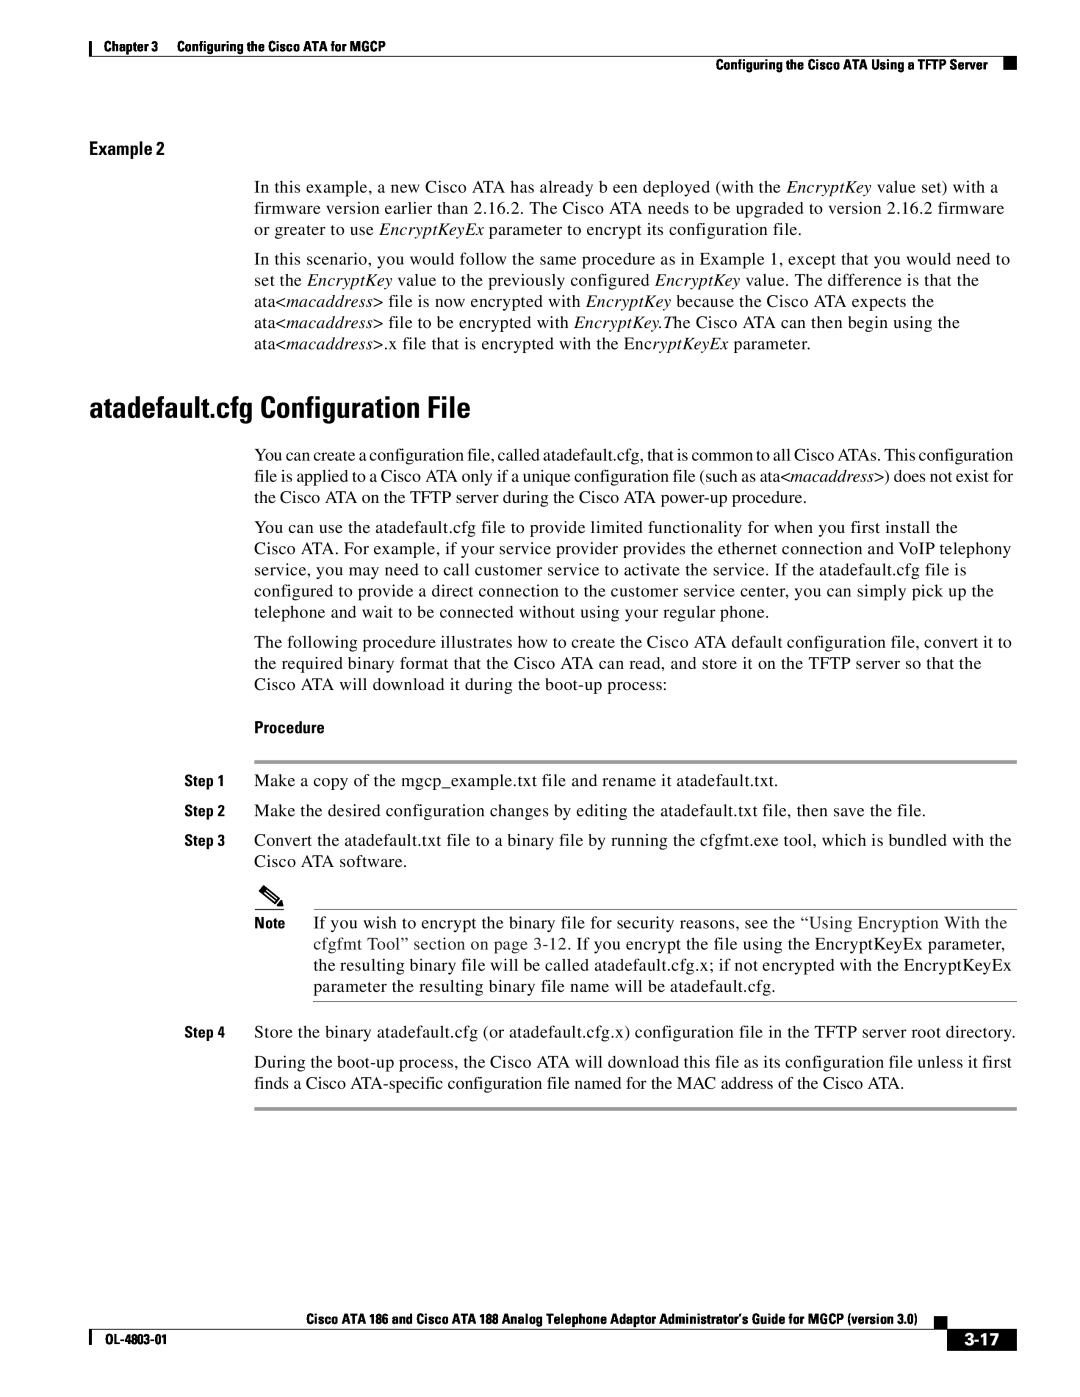 Cisco Systems ATA 188, ATA 186 manual atadefault.cfg Configuration File, 3-17, Example, Procedure 